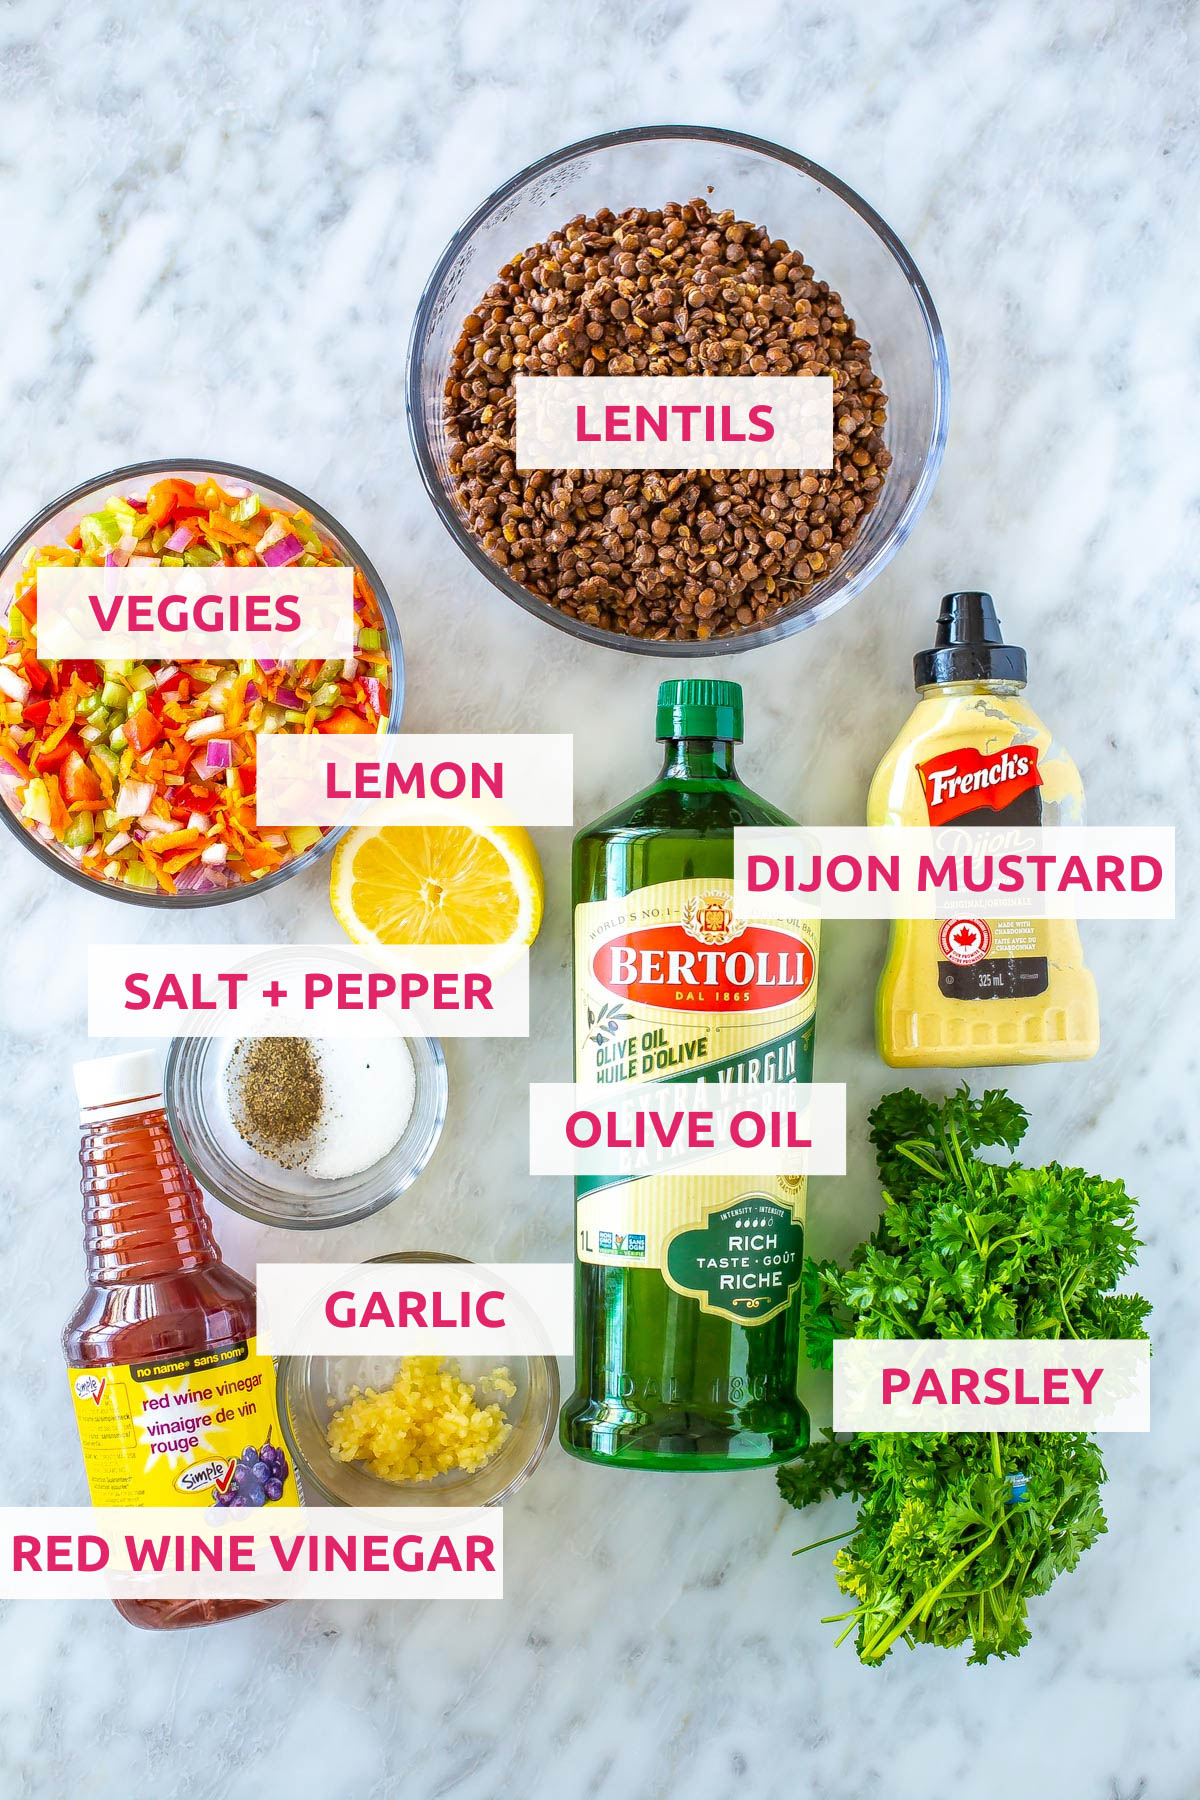 Ingredients for lentil salad: lentils, veggies, lemon, olive oil, dijon mustard, parsley, red wine vinegar, garlic and salt and pepper.